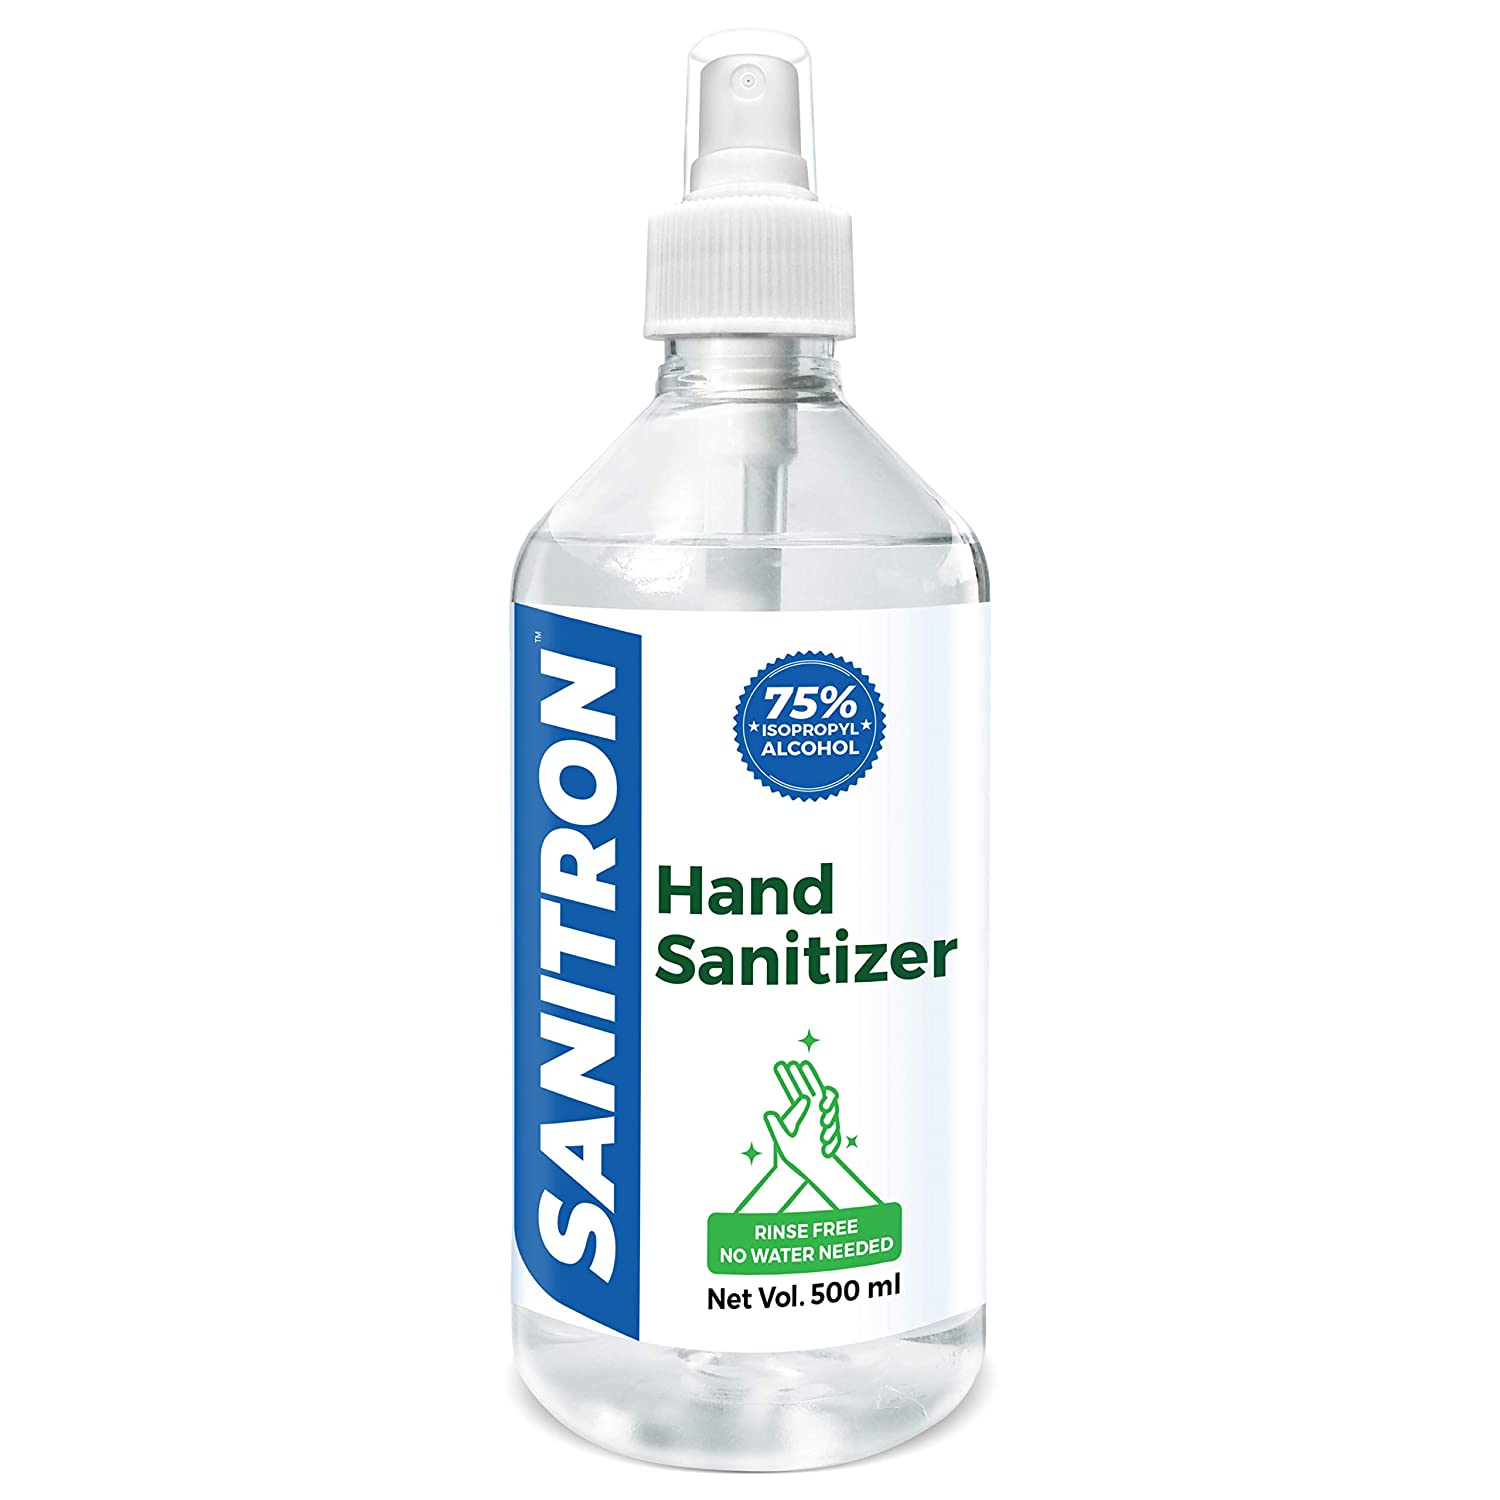 14. SANITRON Hand Sanitizer